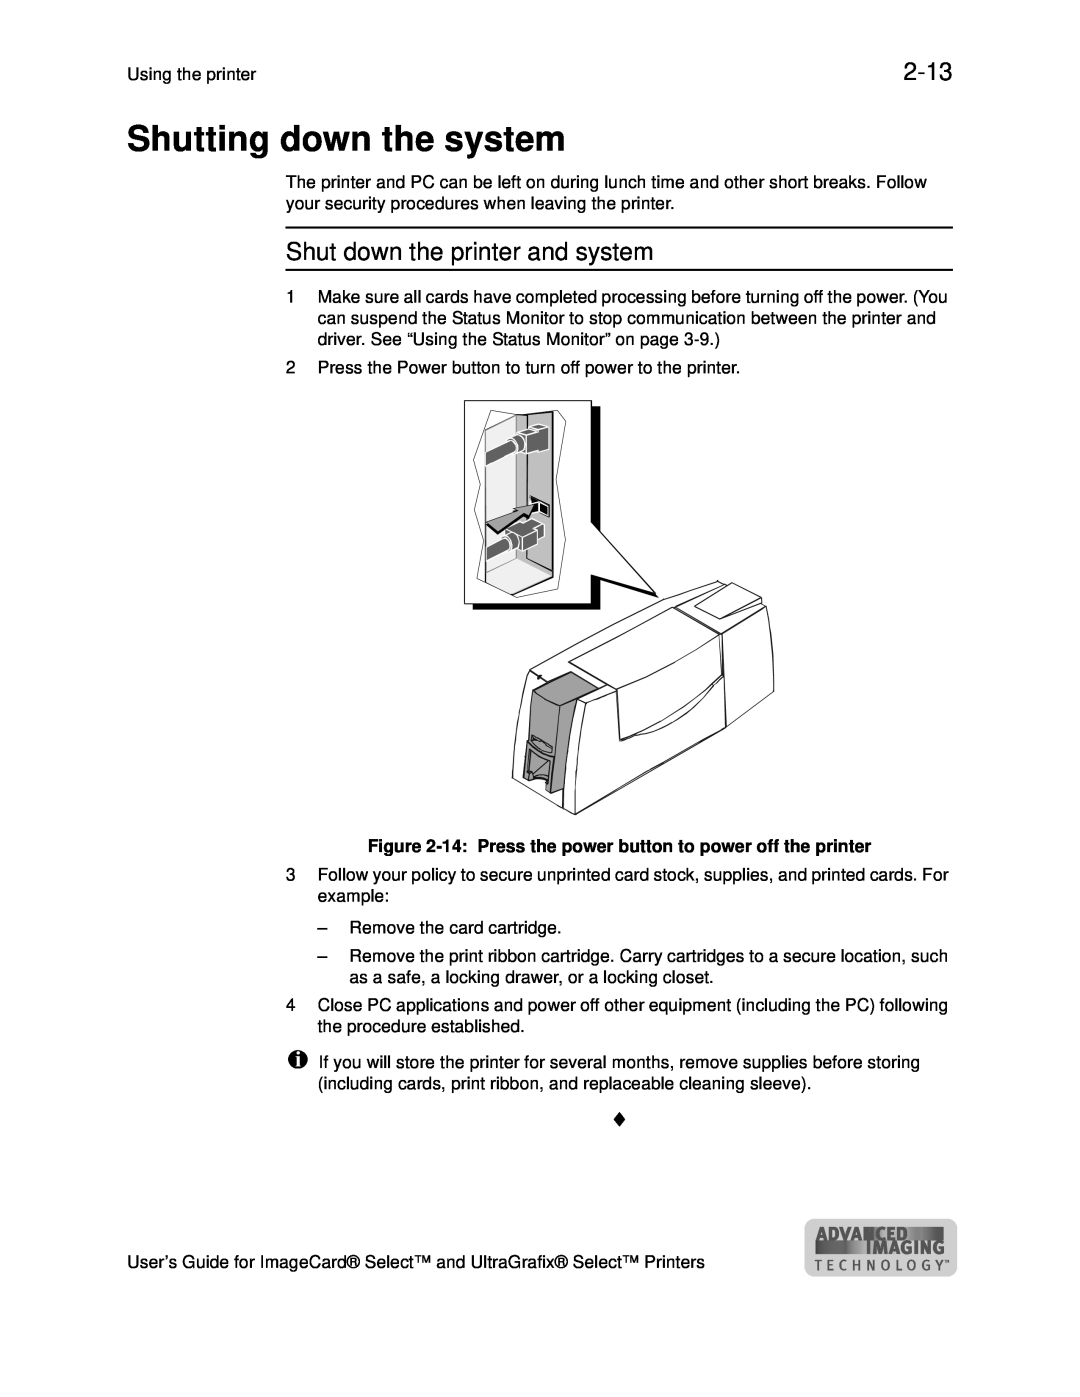 Datacard Group ImageCard SelectTM and UltraGrafix SelectTM Printers manual Shutting down the system, 2-13 